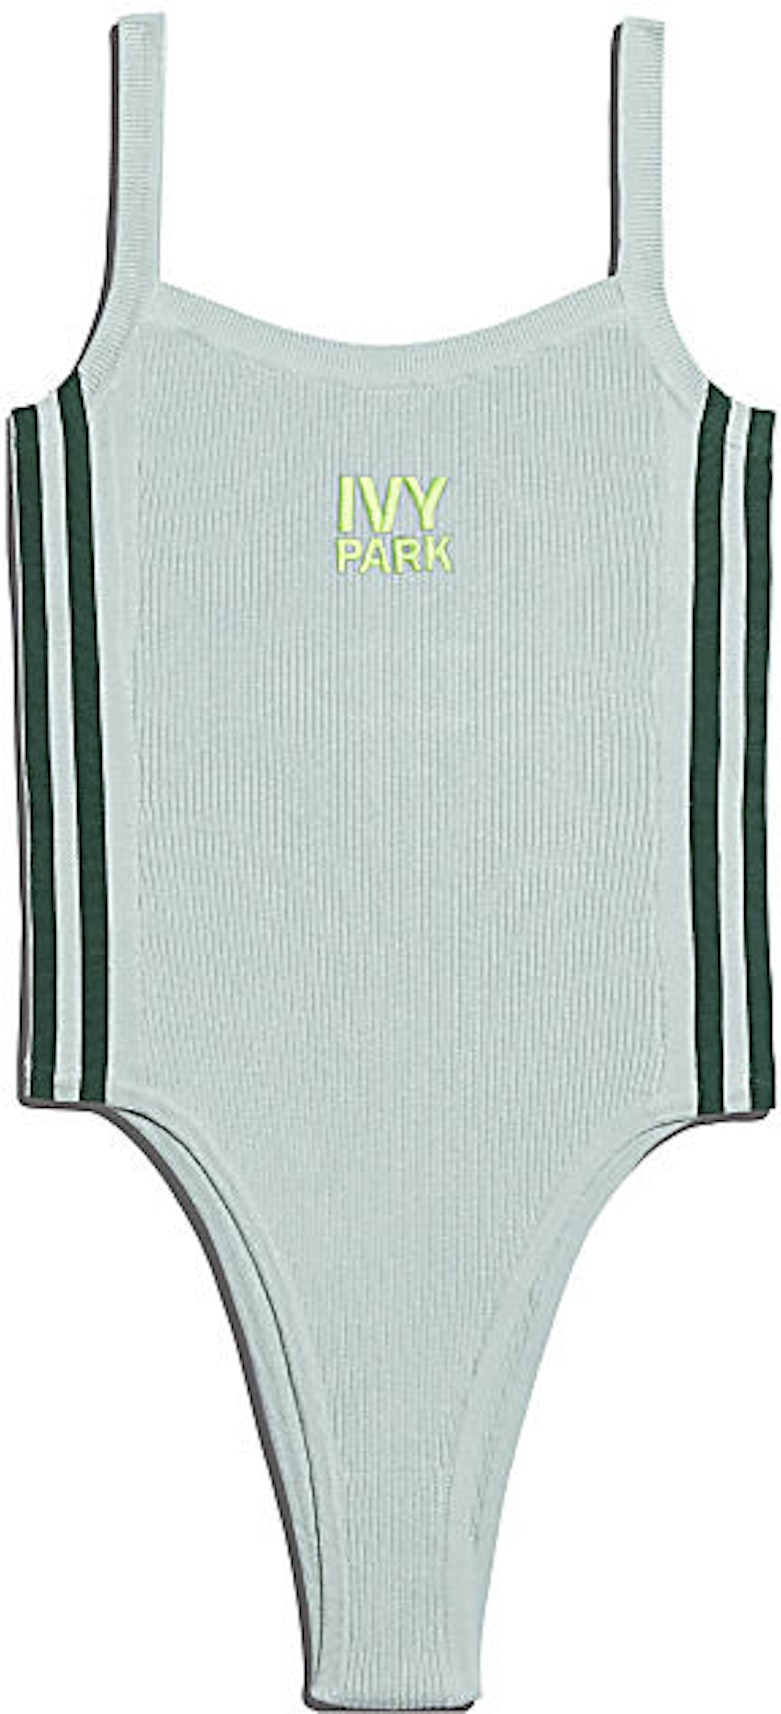 Herformuleren Grap Editie adidas Ivy Park Knit Tank Bodysuit Green Tint - FW20 - US